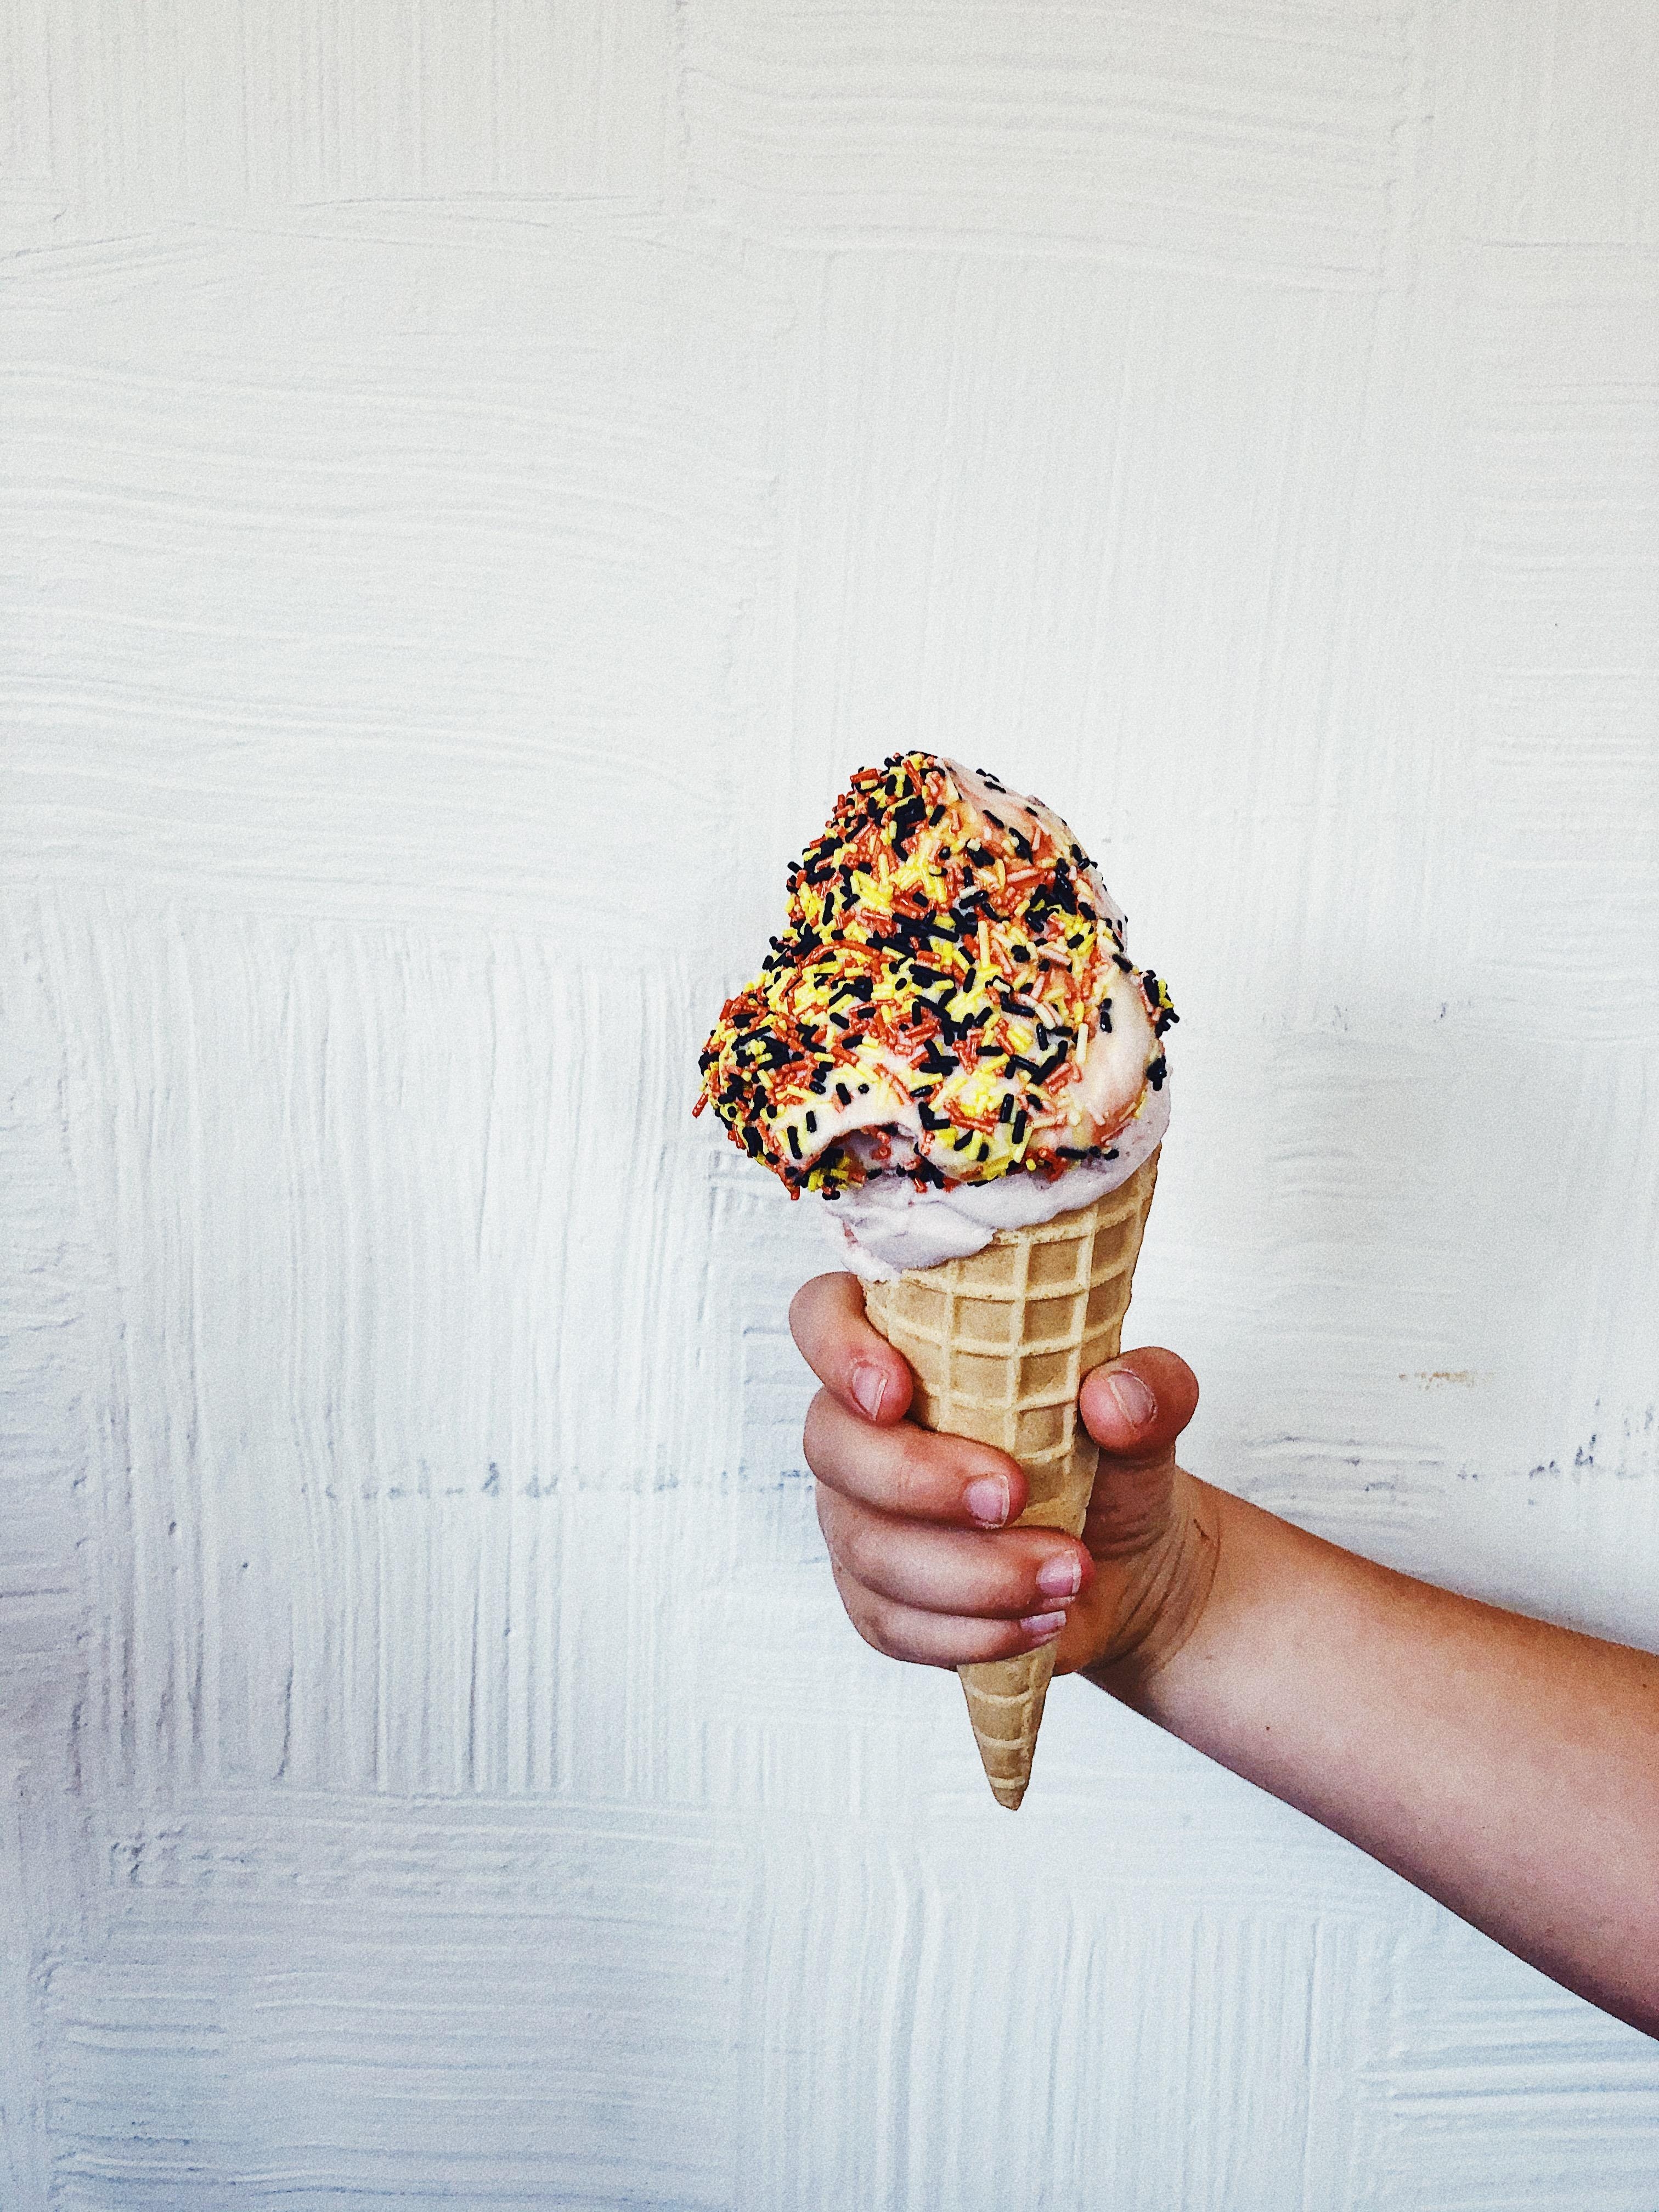 SUMMERLOVE
#icecream #iceicebaby #streusel #eisliebe #icecreamtime #hamburg #kitchenstories